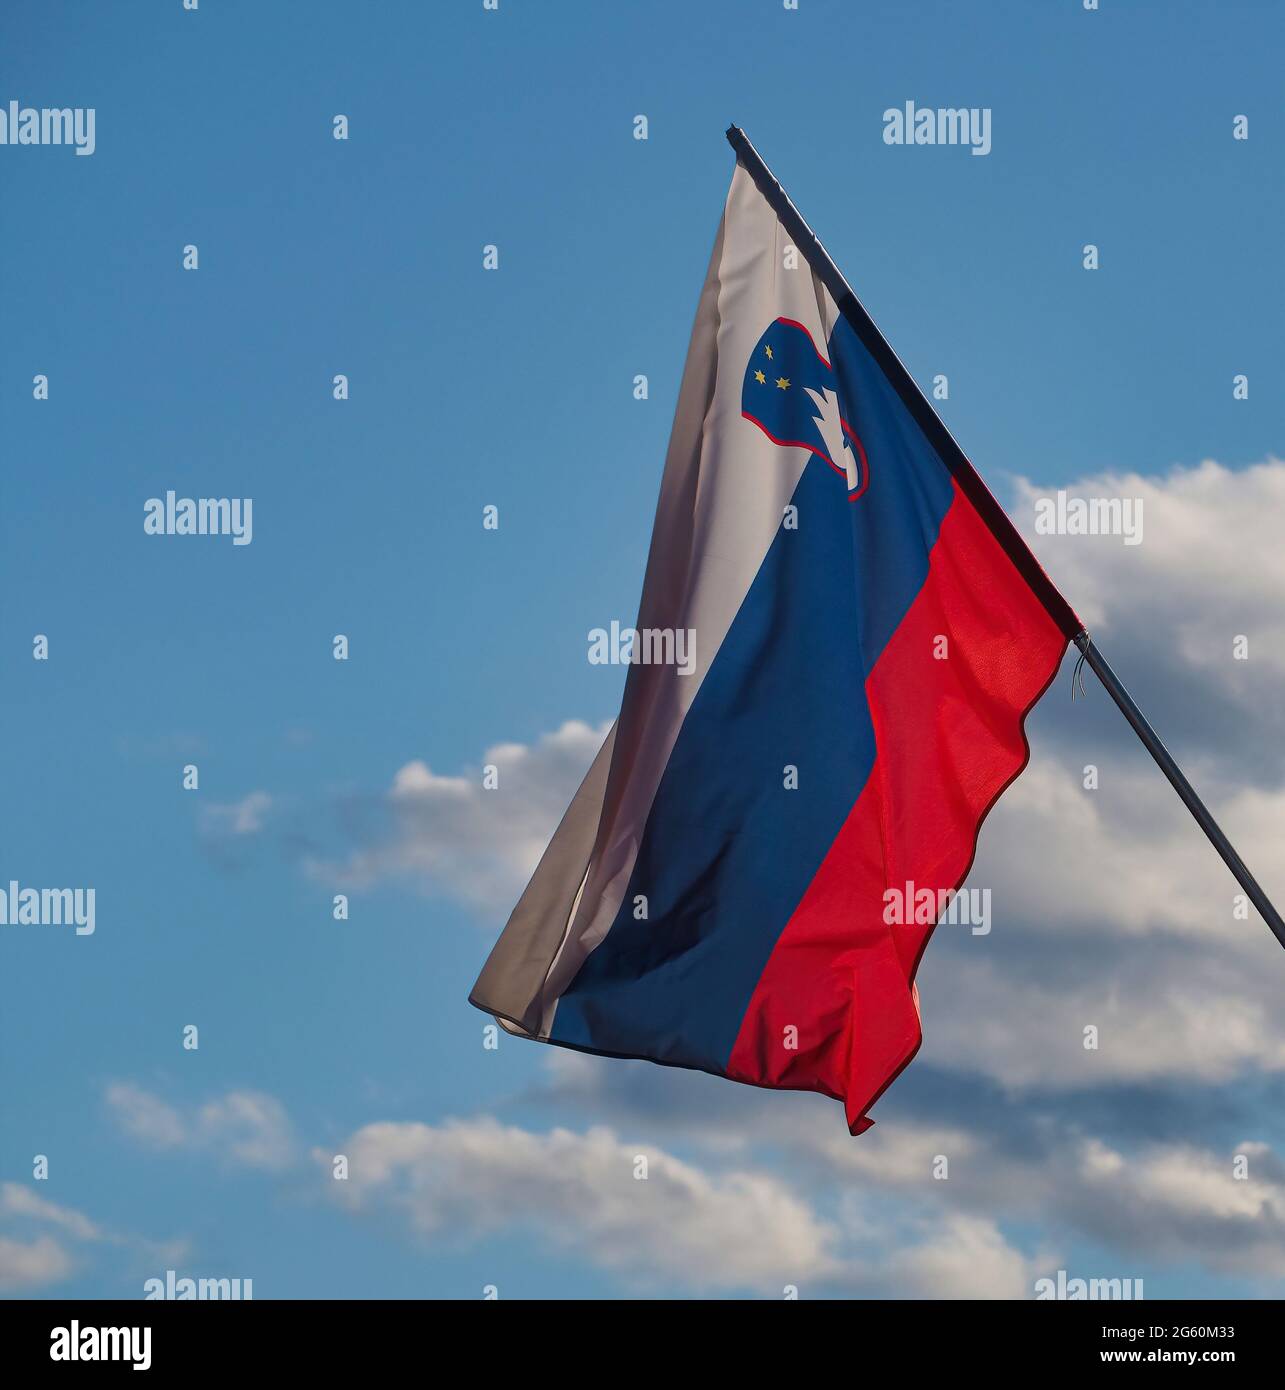 Flag of Slovenia waving in the sky Stock Photo